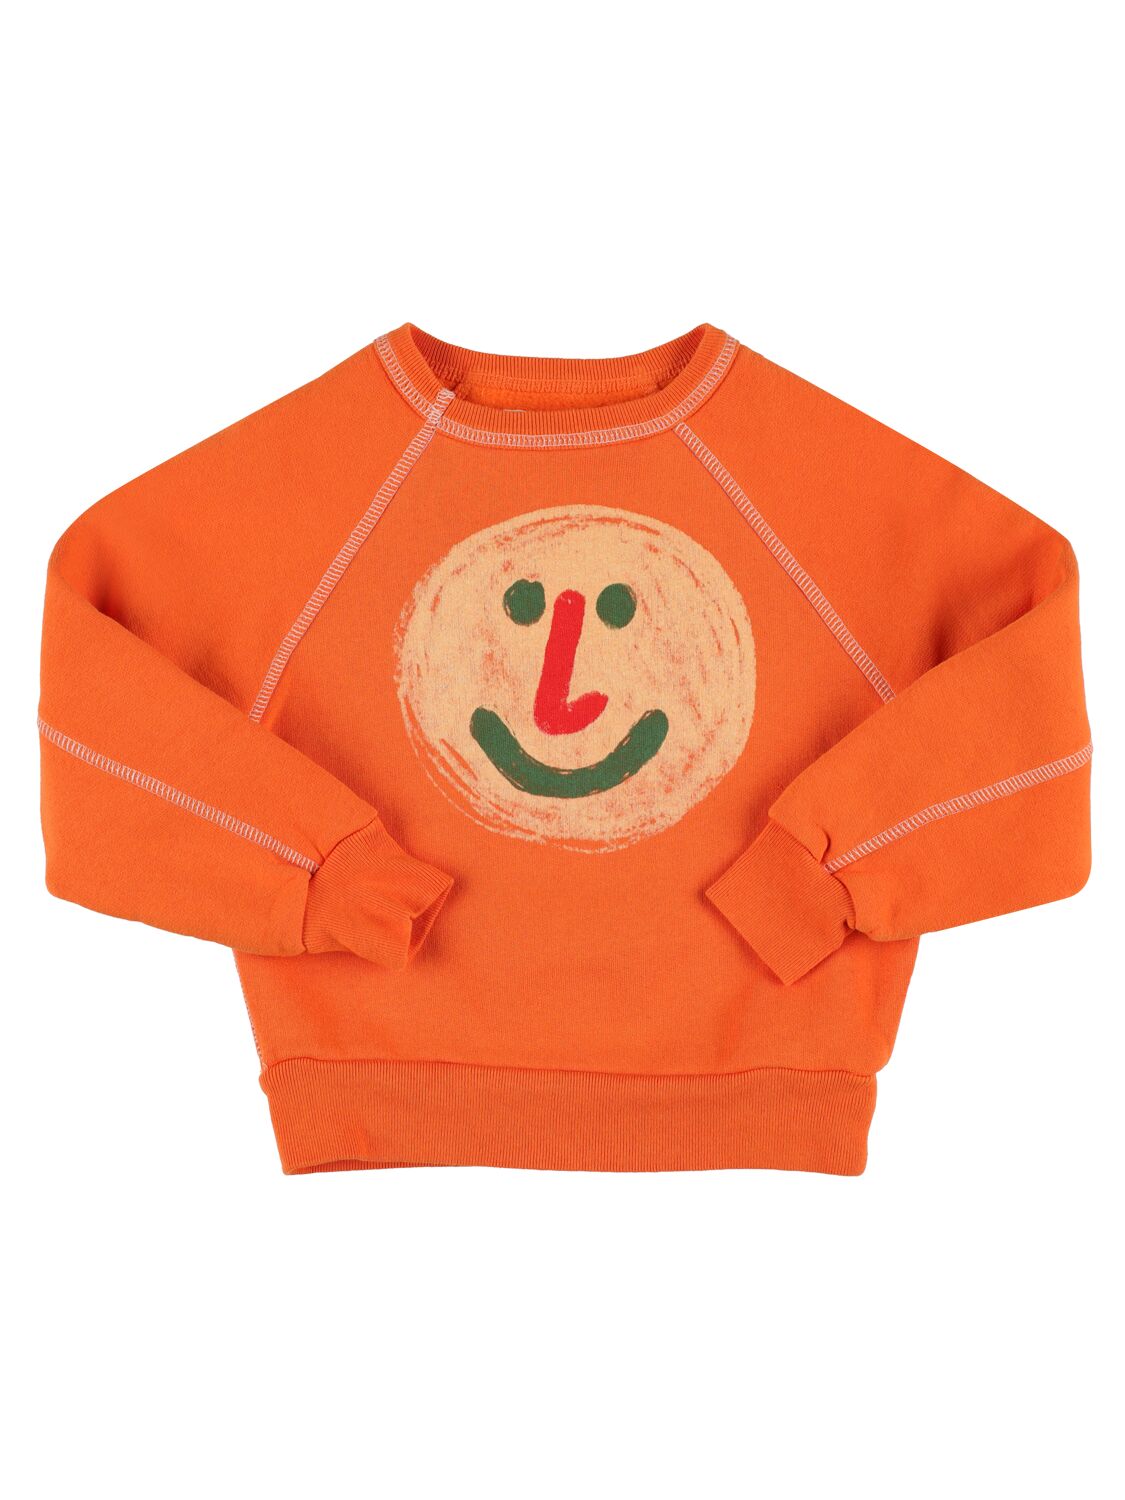 Image of Smiley Face Printed Cotton Sweatshirt